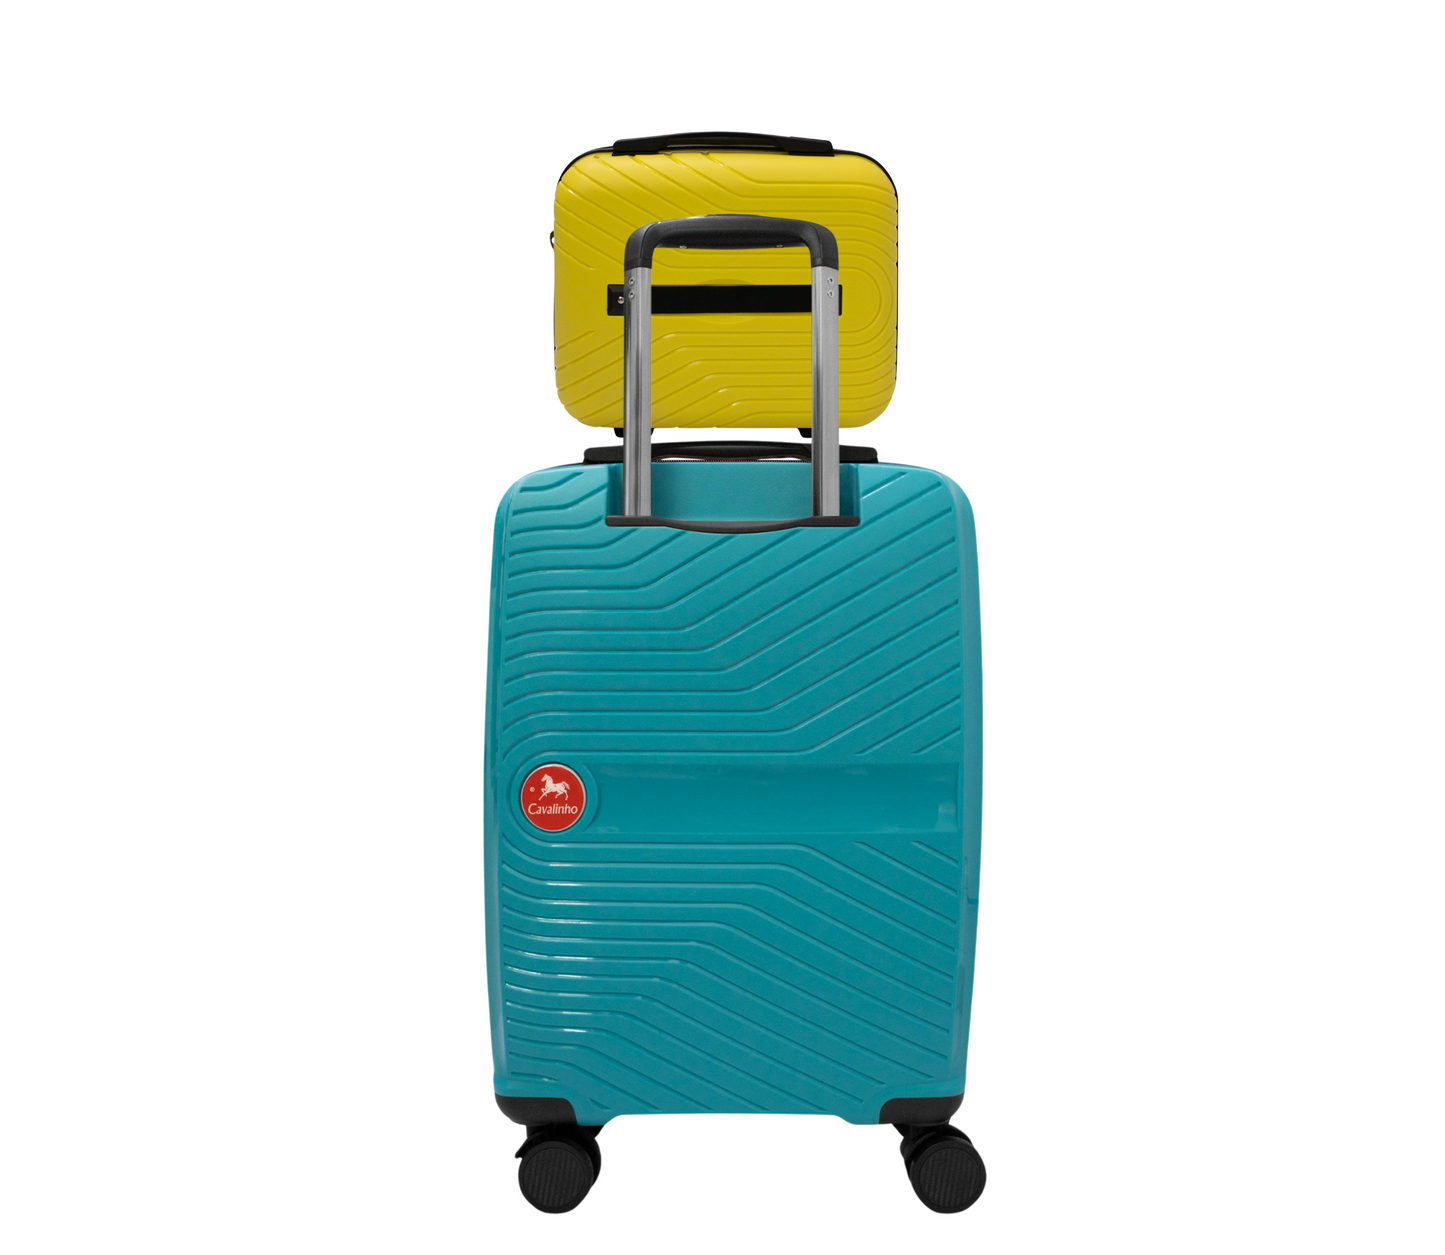 Cavalinho Canada & USA Colorful 2 Piece Luggage Set (15" & 19") - Yellow DarkTurquoise - 68020004.0825.S1519._2